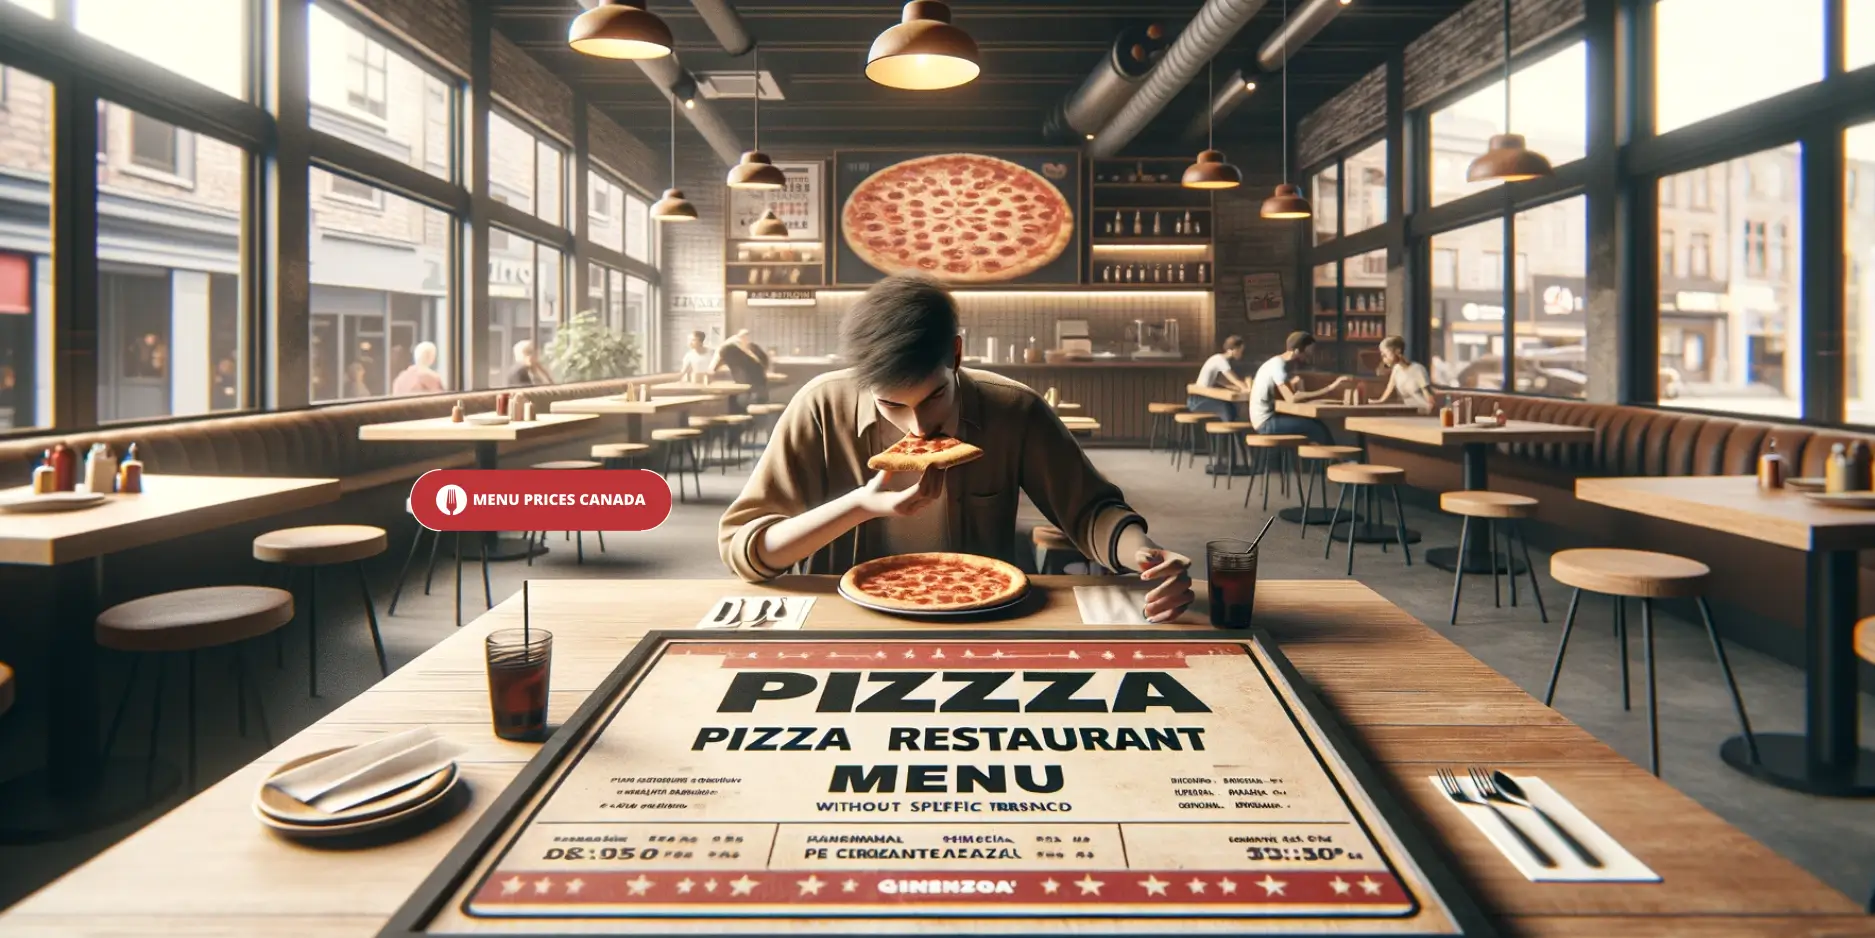 Pizza-pizza-Restaurant-Menu-Prices-Canada